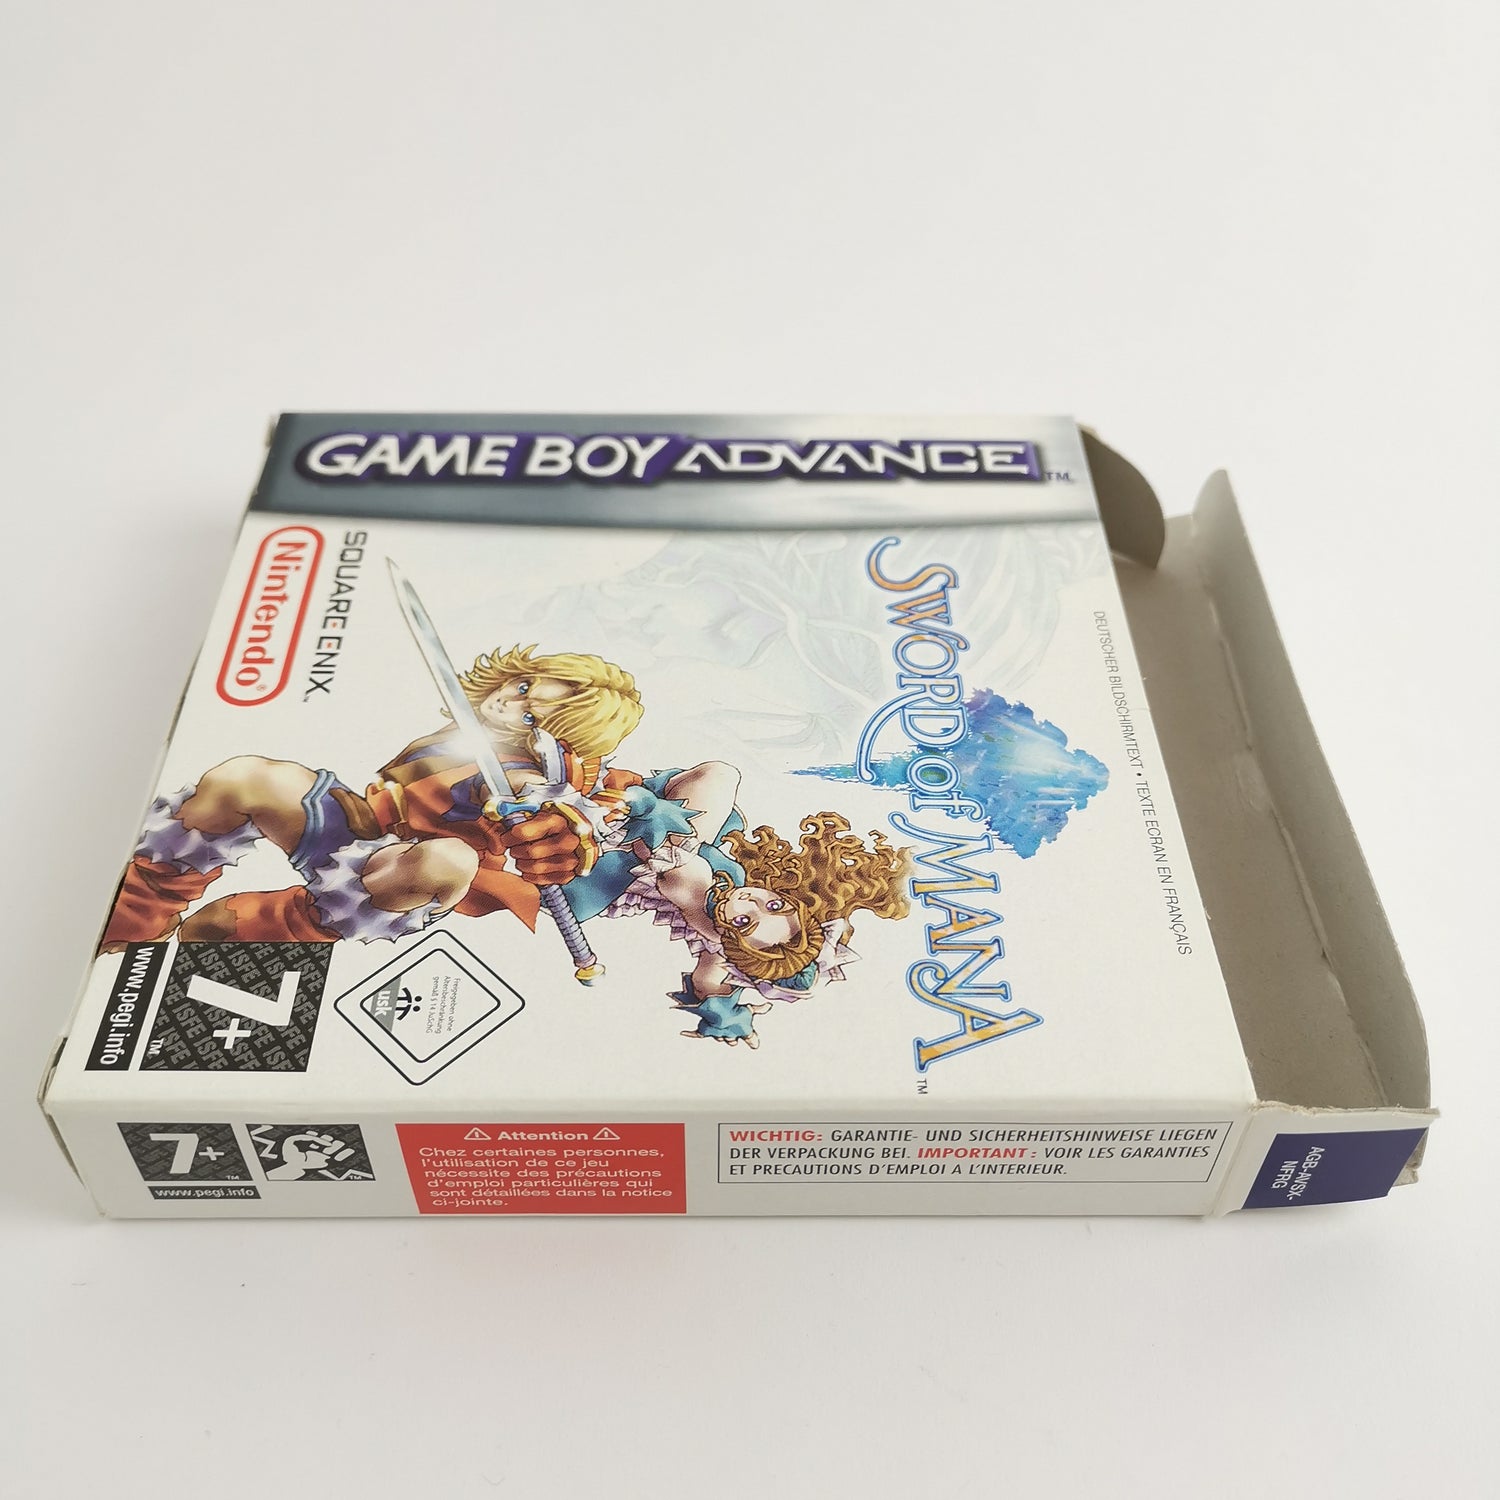 Nintendo Game Boy Advance Game: Sword of Mana - OVP & Instructions | Square Enix